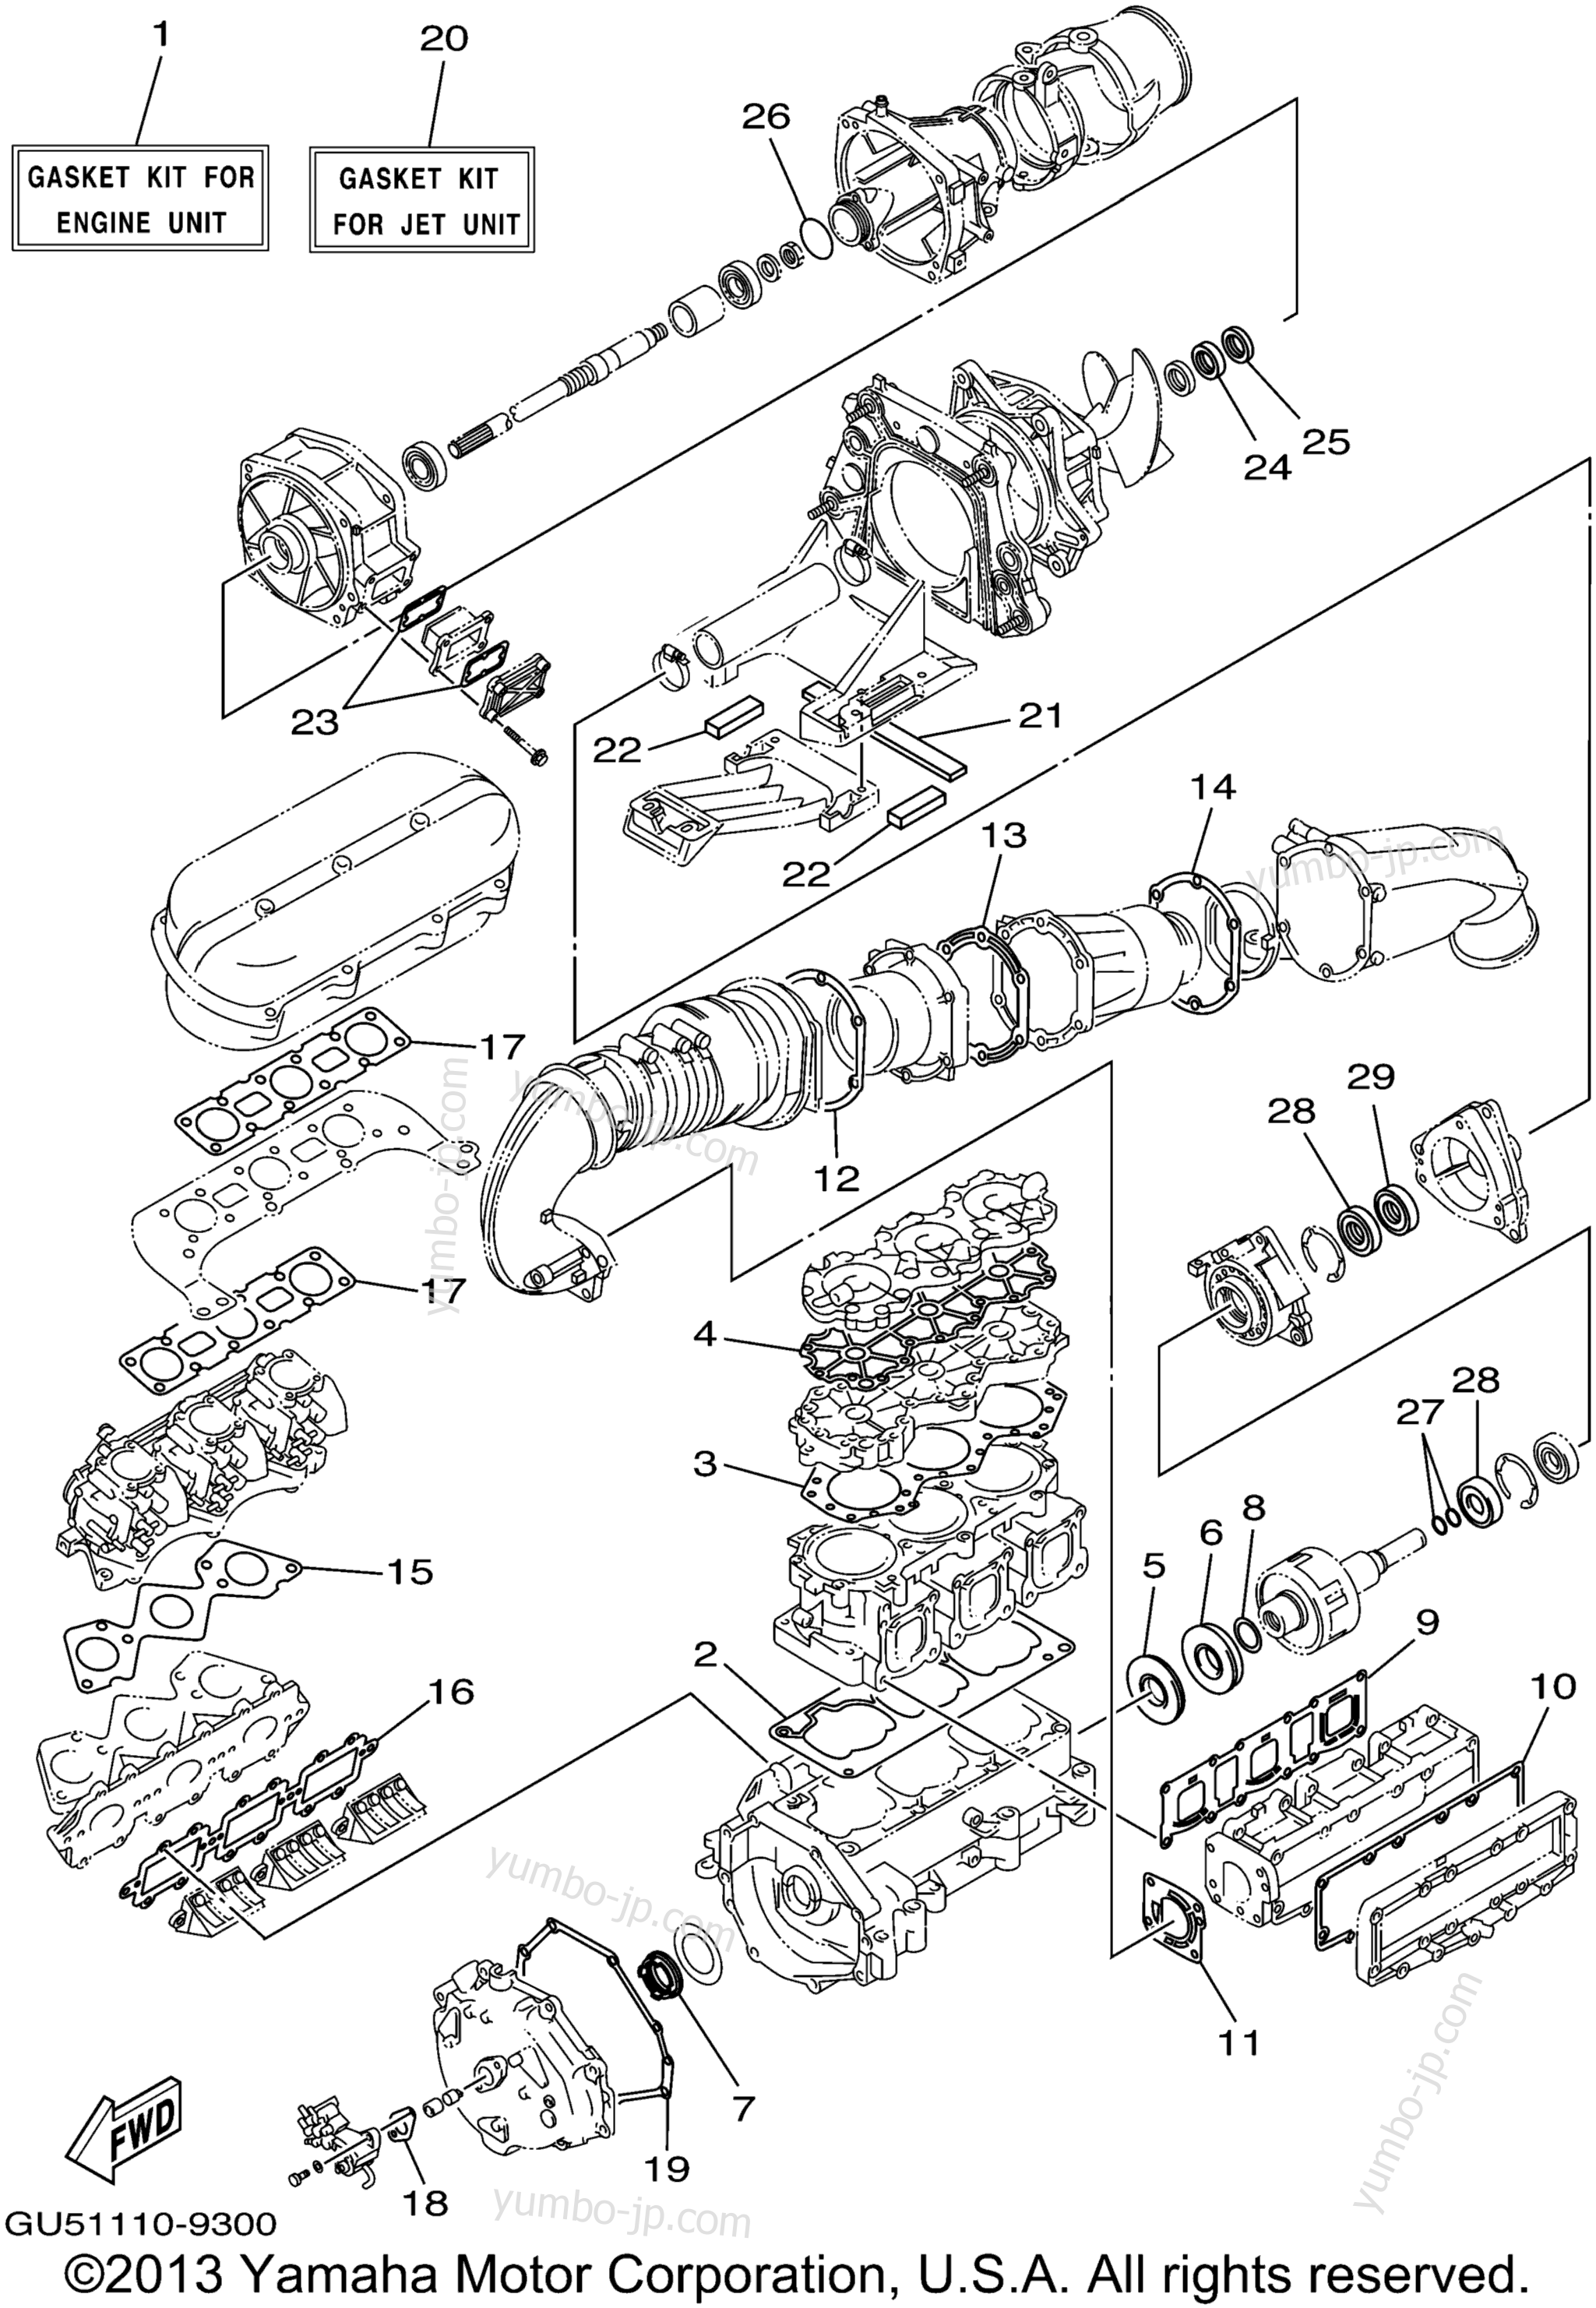 Repair Kit 1 для гидроциклов YAMAHA SUV1200 (SV1200Z) 2001 г.